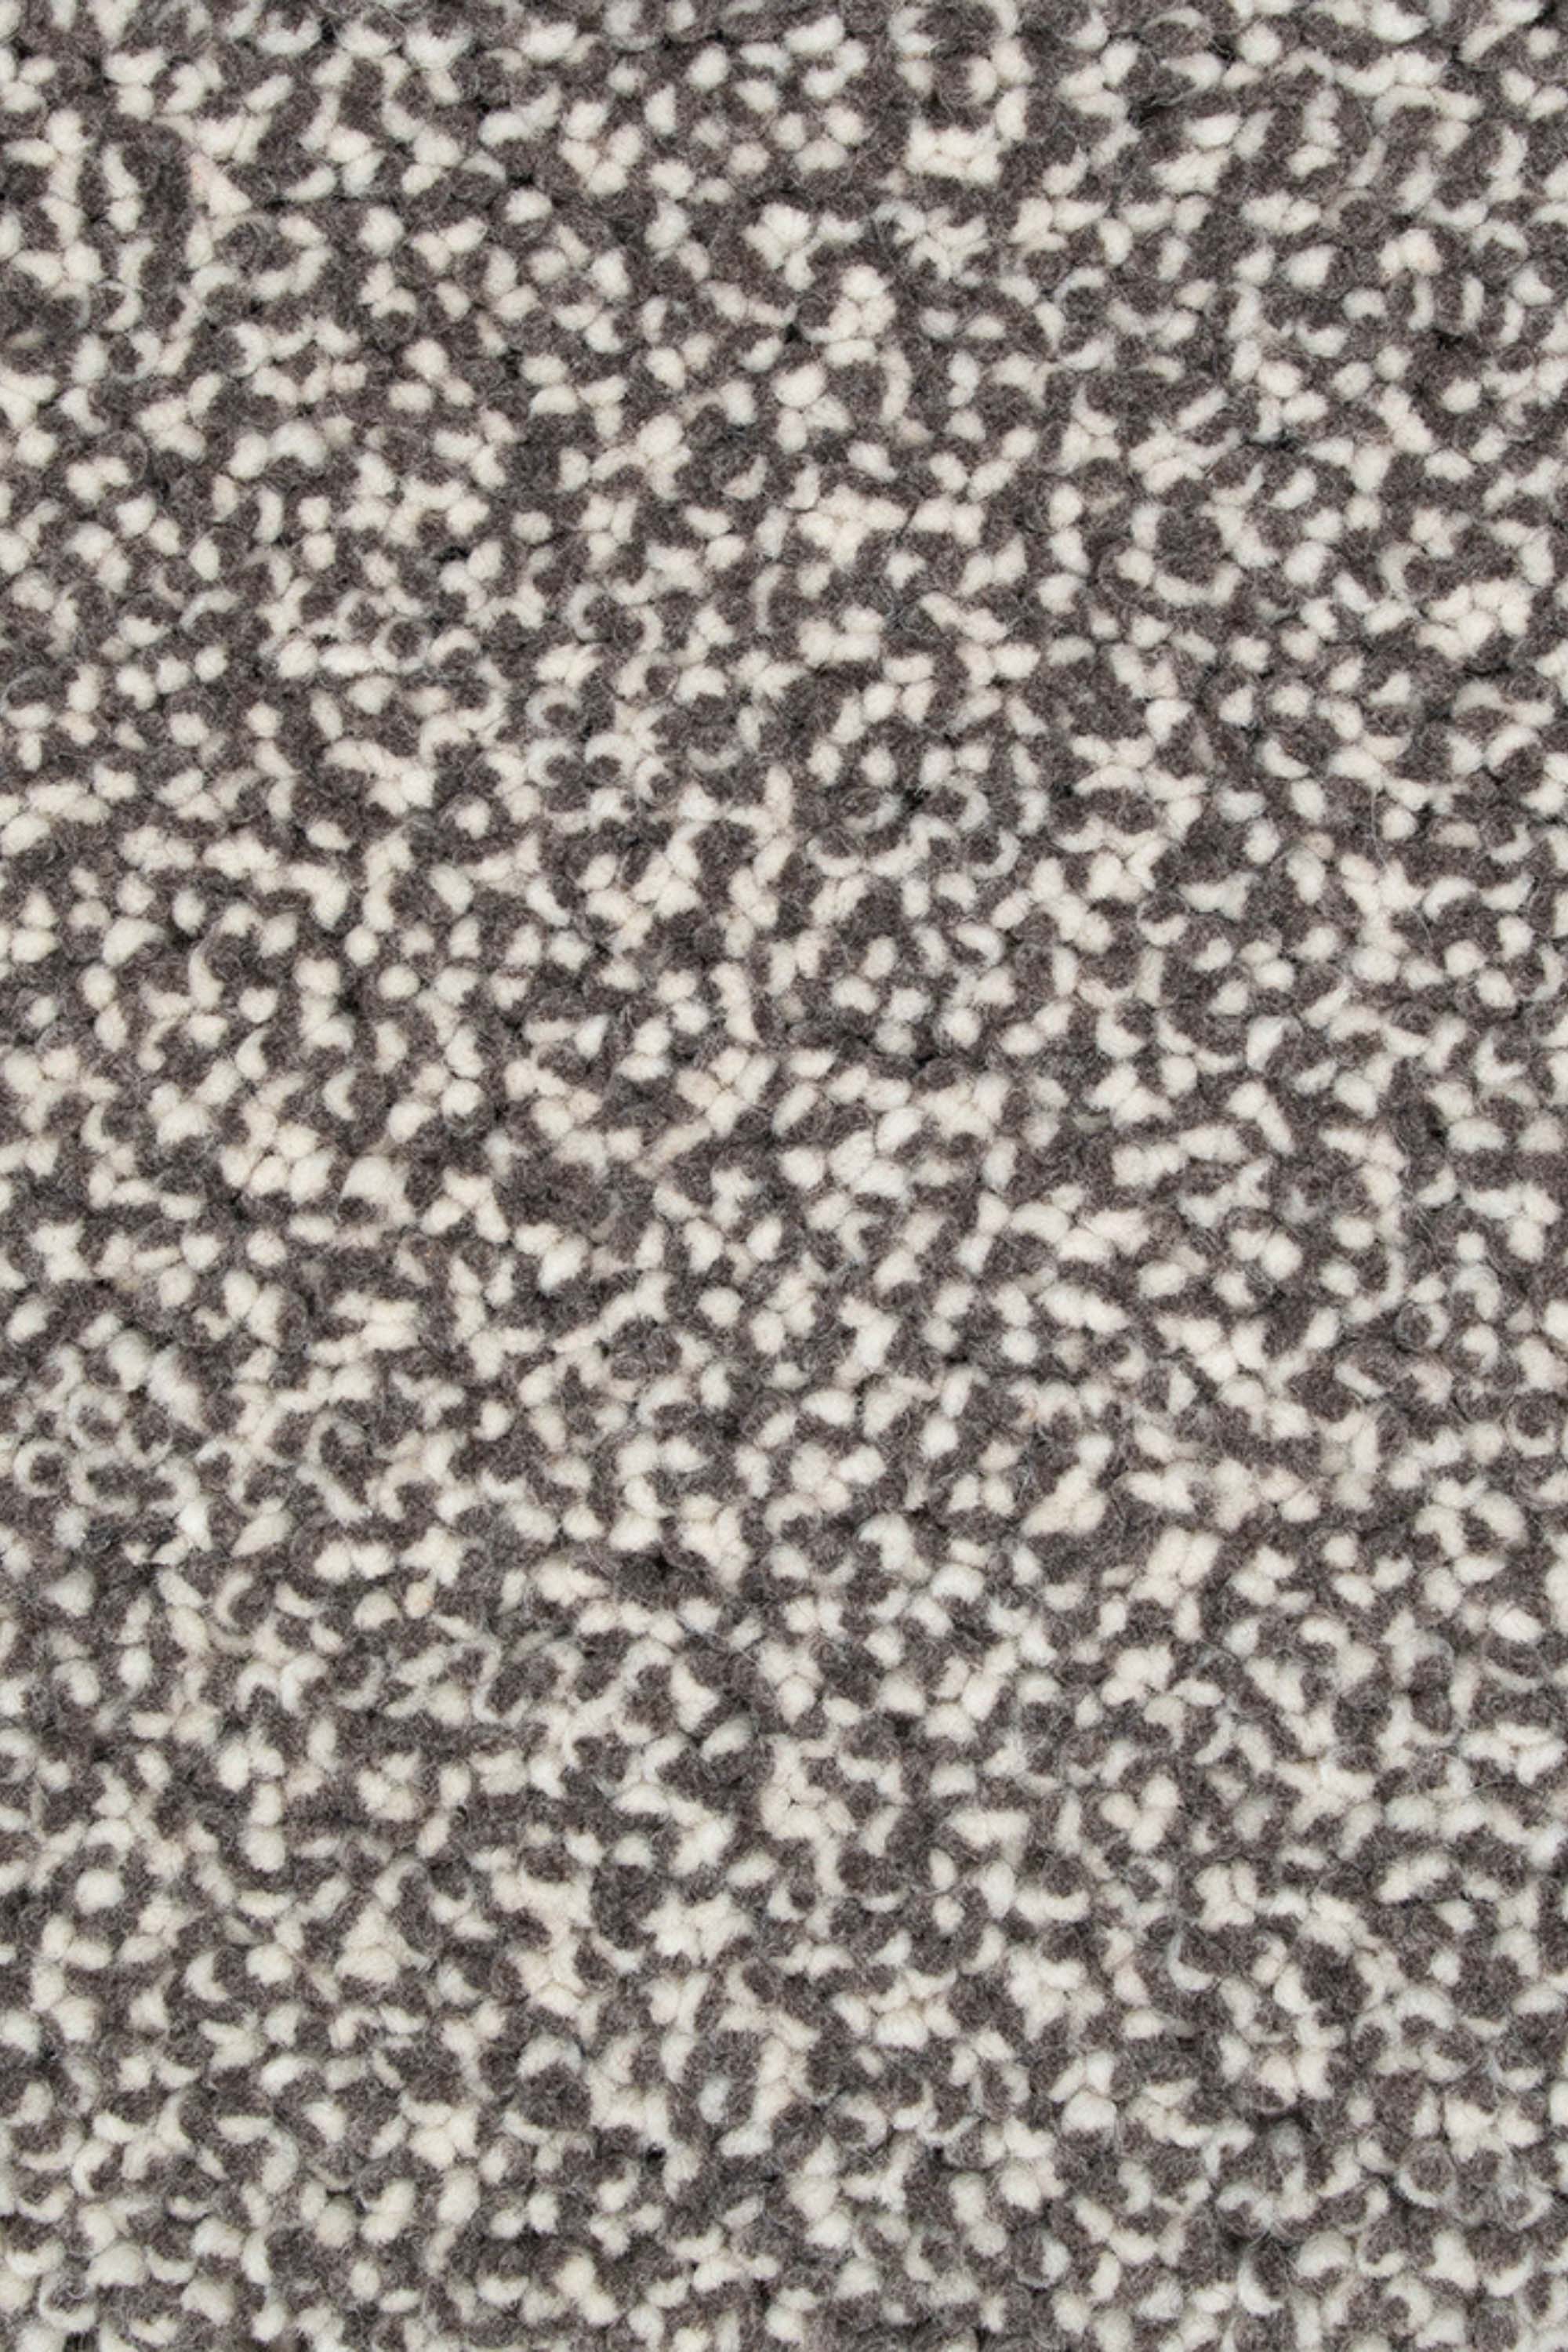 Plain dark grey rug with textured pile